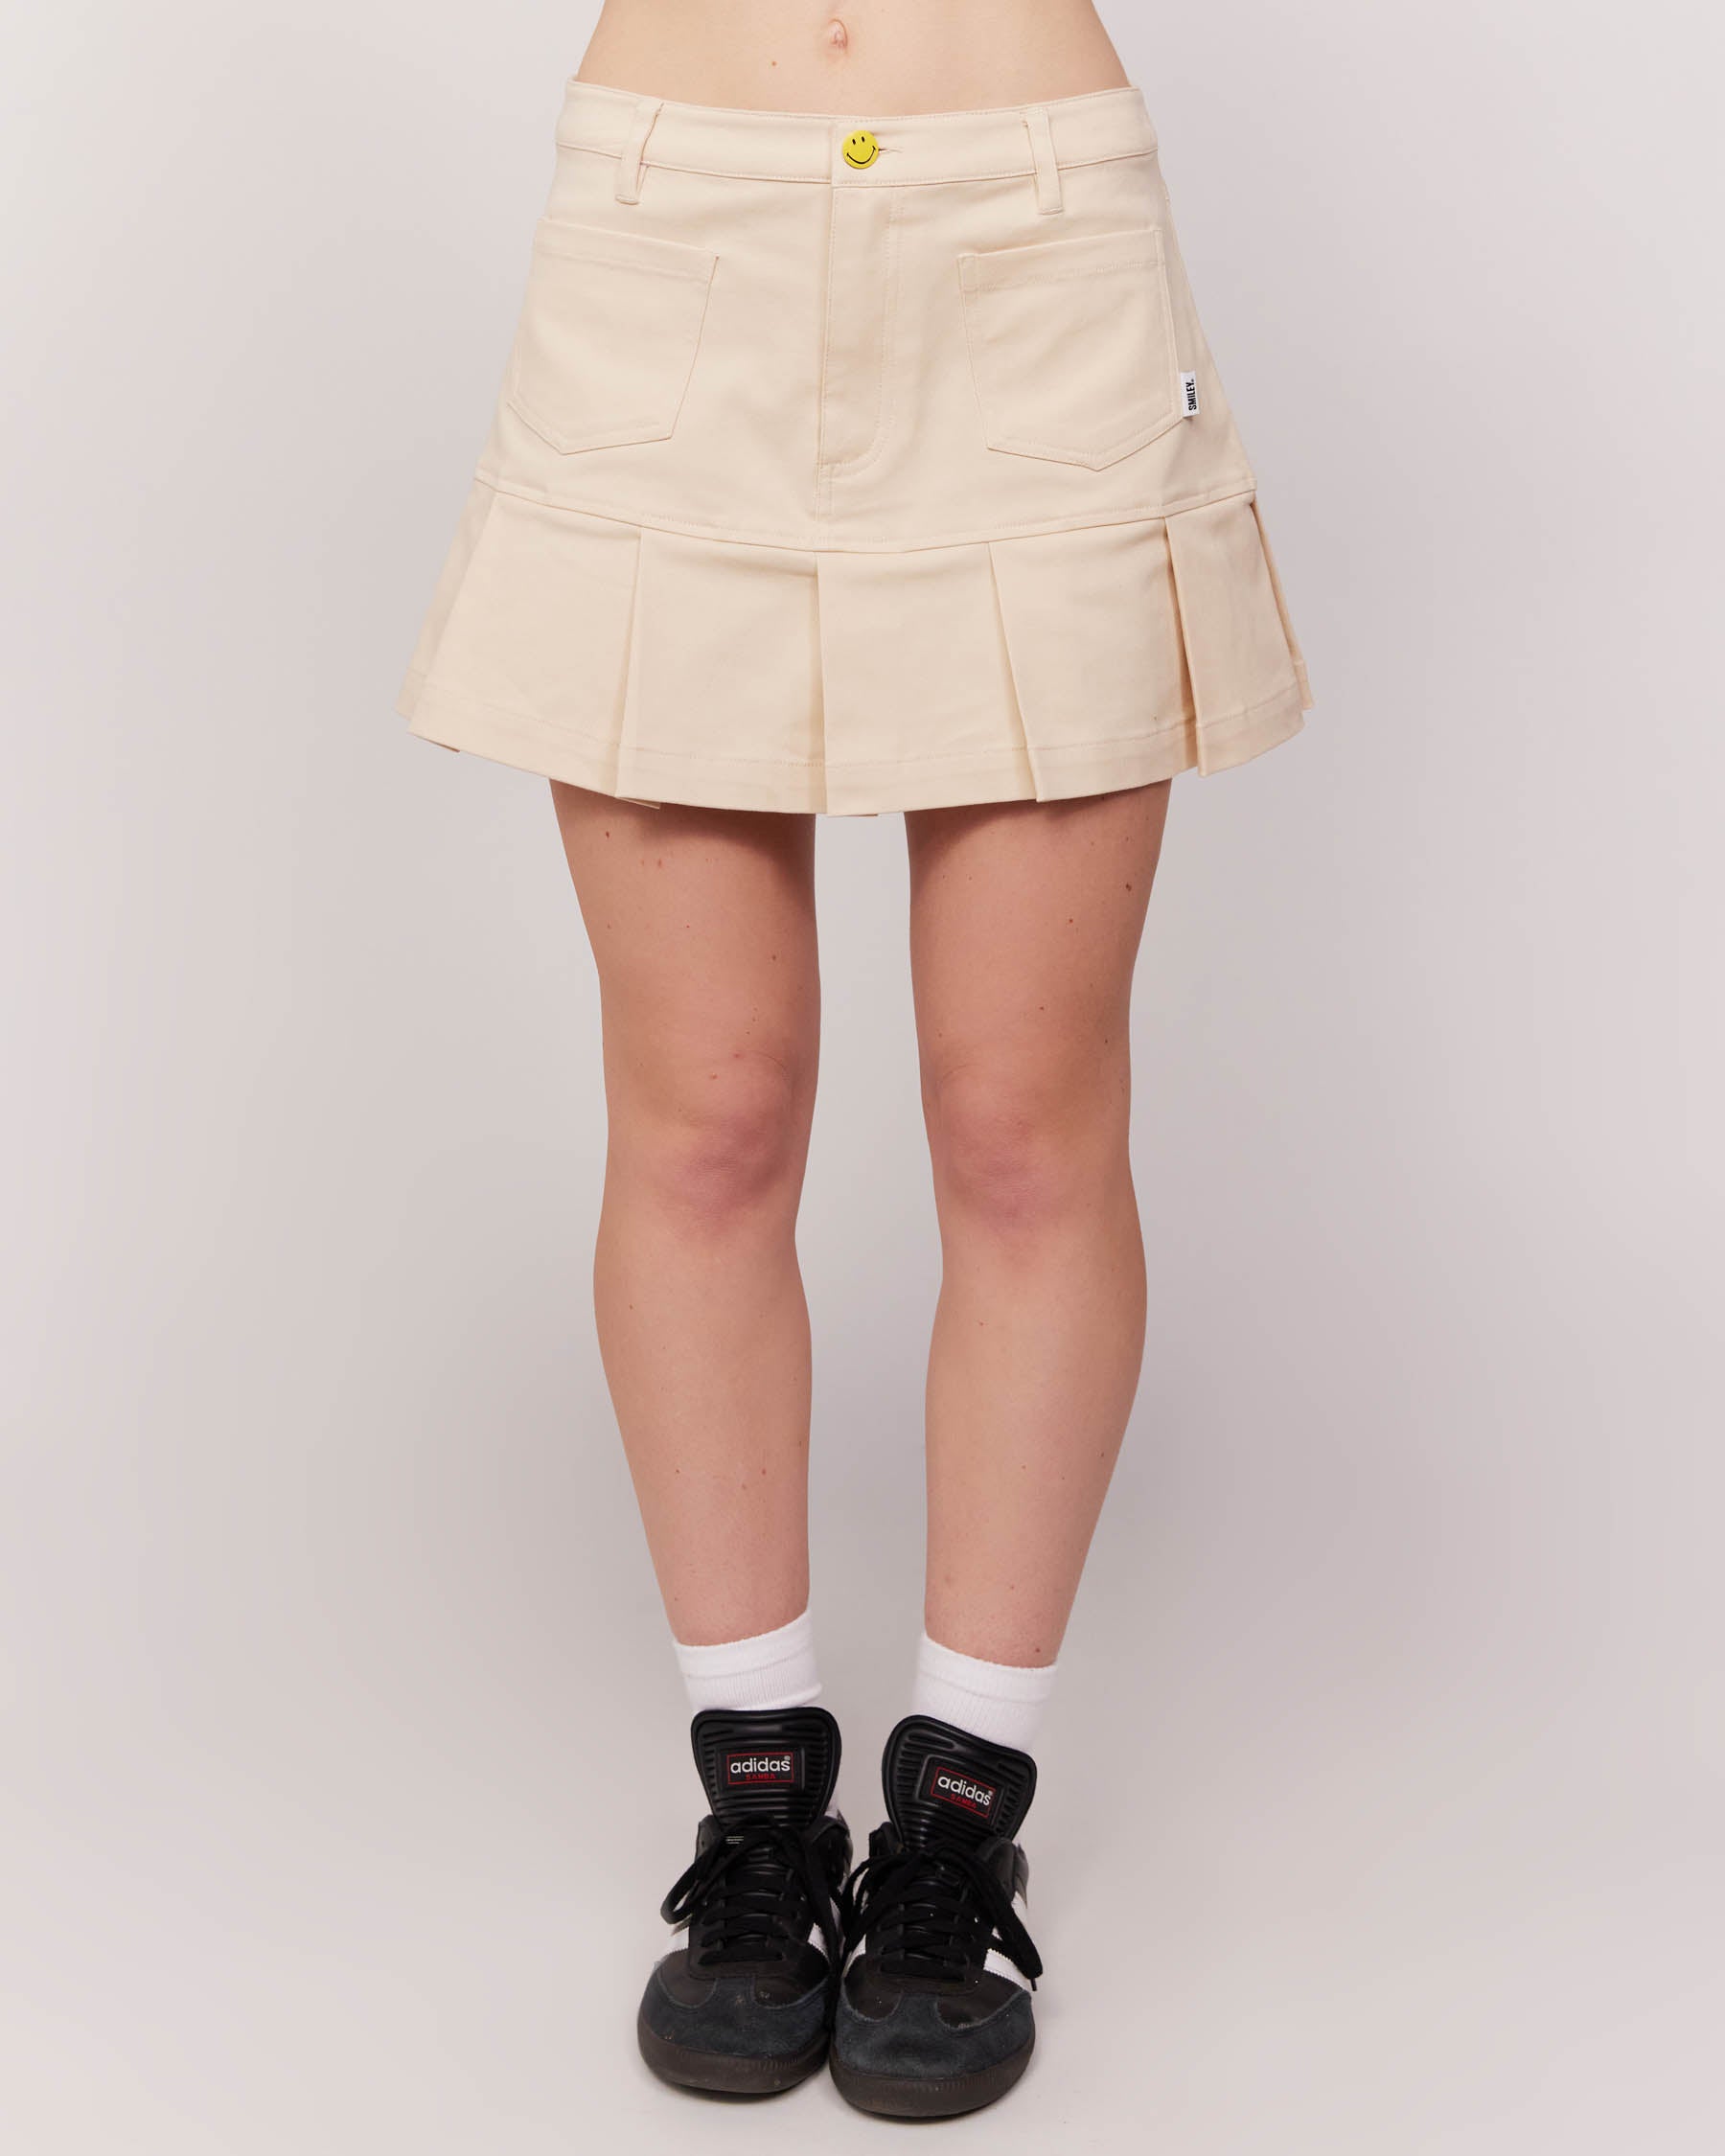 khaki tennis skirt